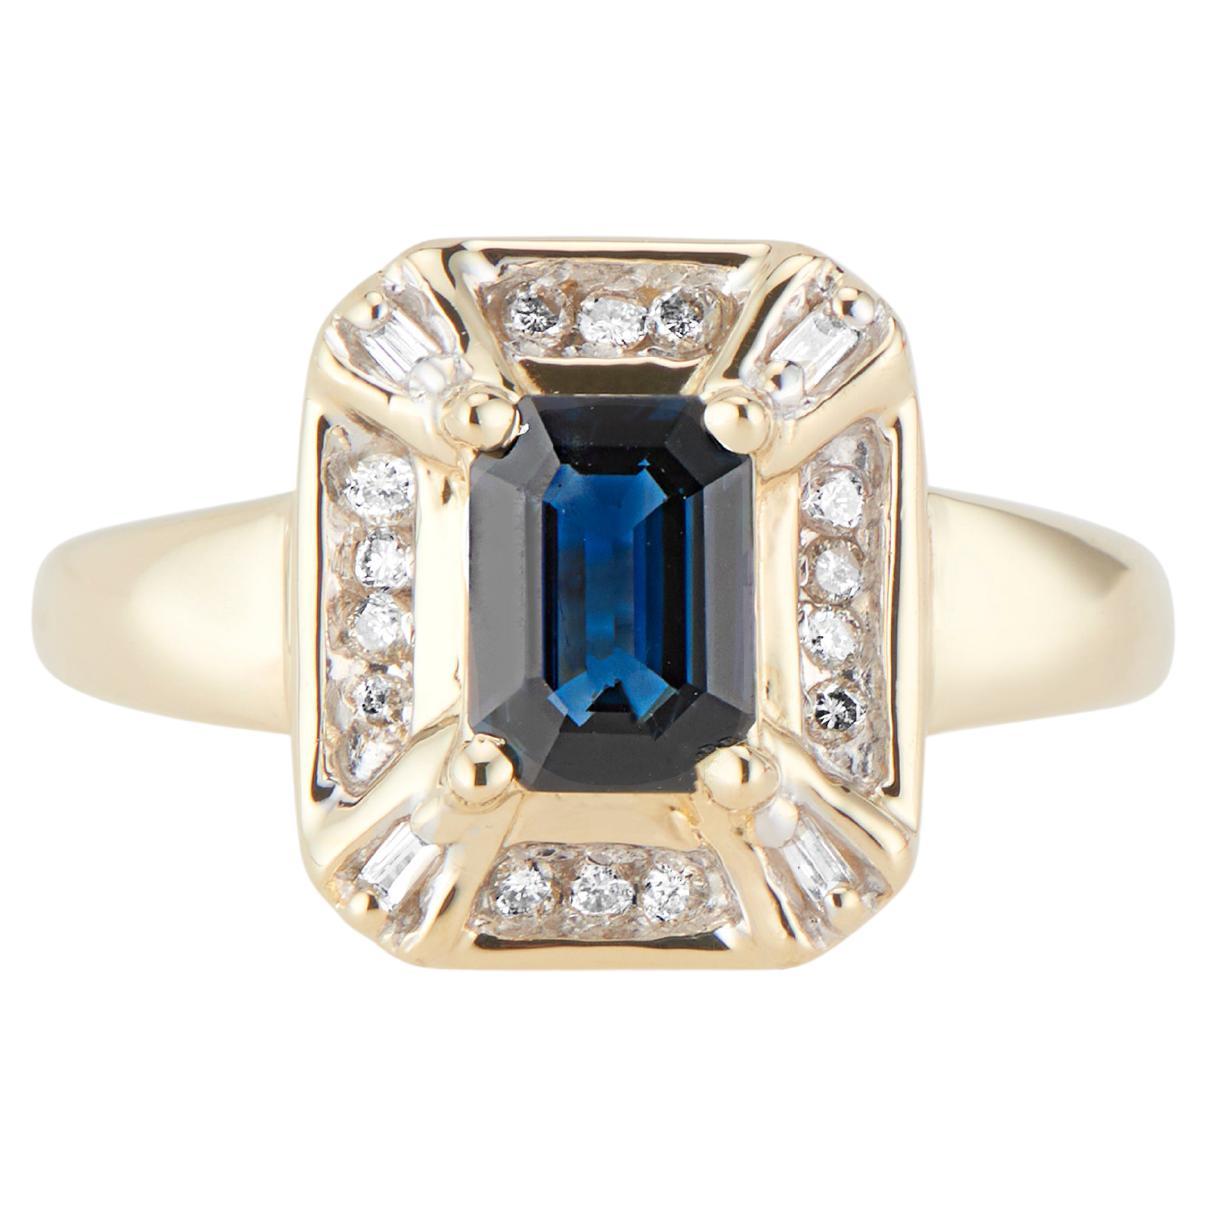 Emerald Cut Sapphire And Rare Quadrillion Cut Diamonds Gold Ring At